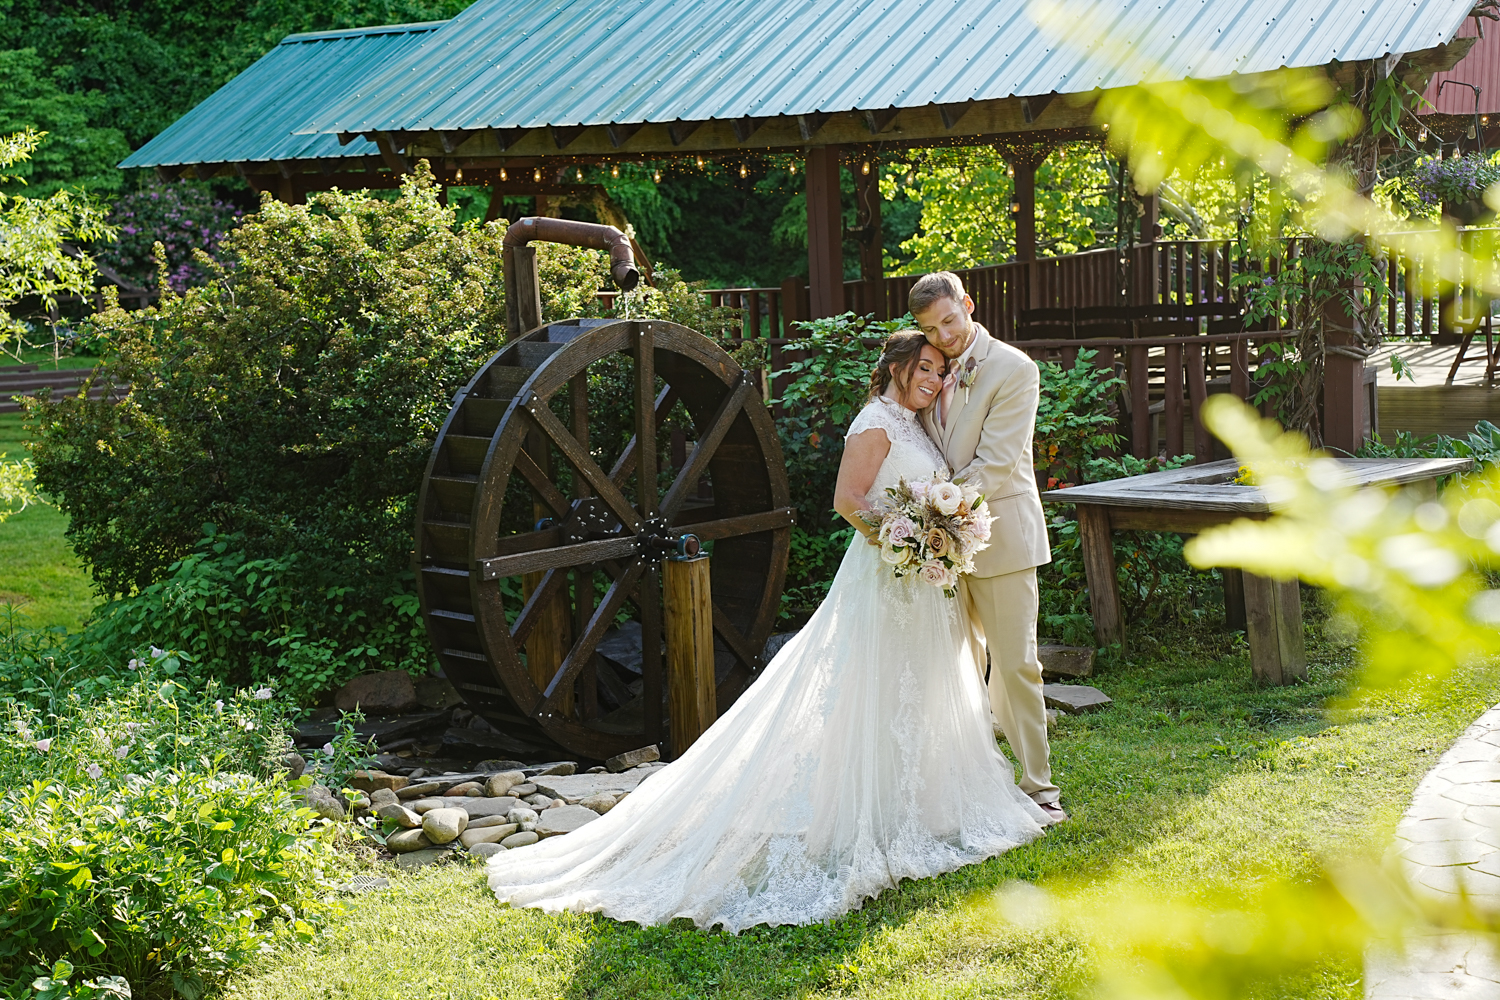 Informal wedding portrait in the summer next to a wooden water wheel at Honeysuckle Hills in Pigeon Forge